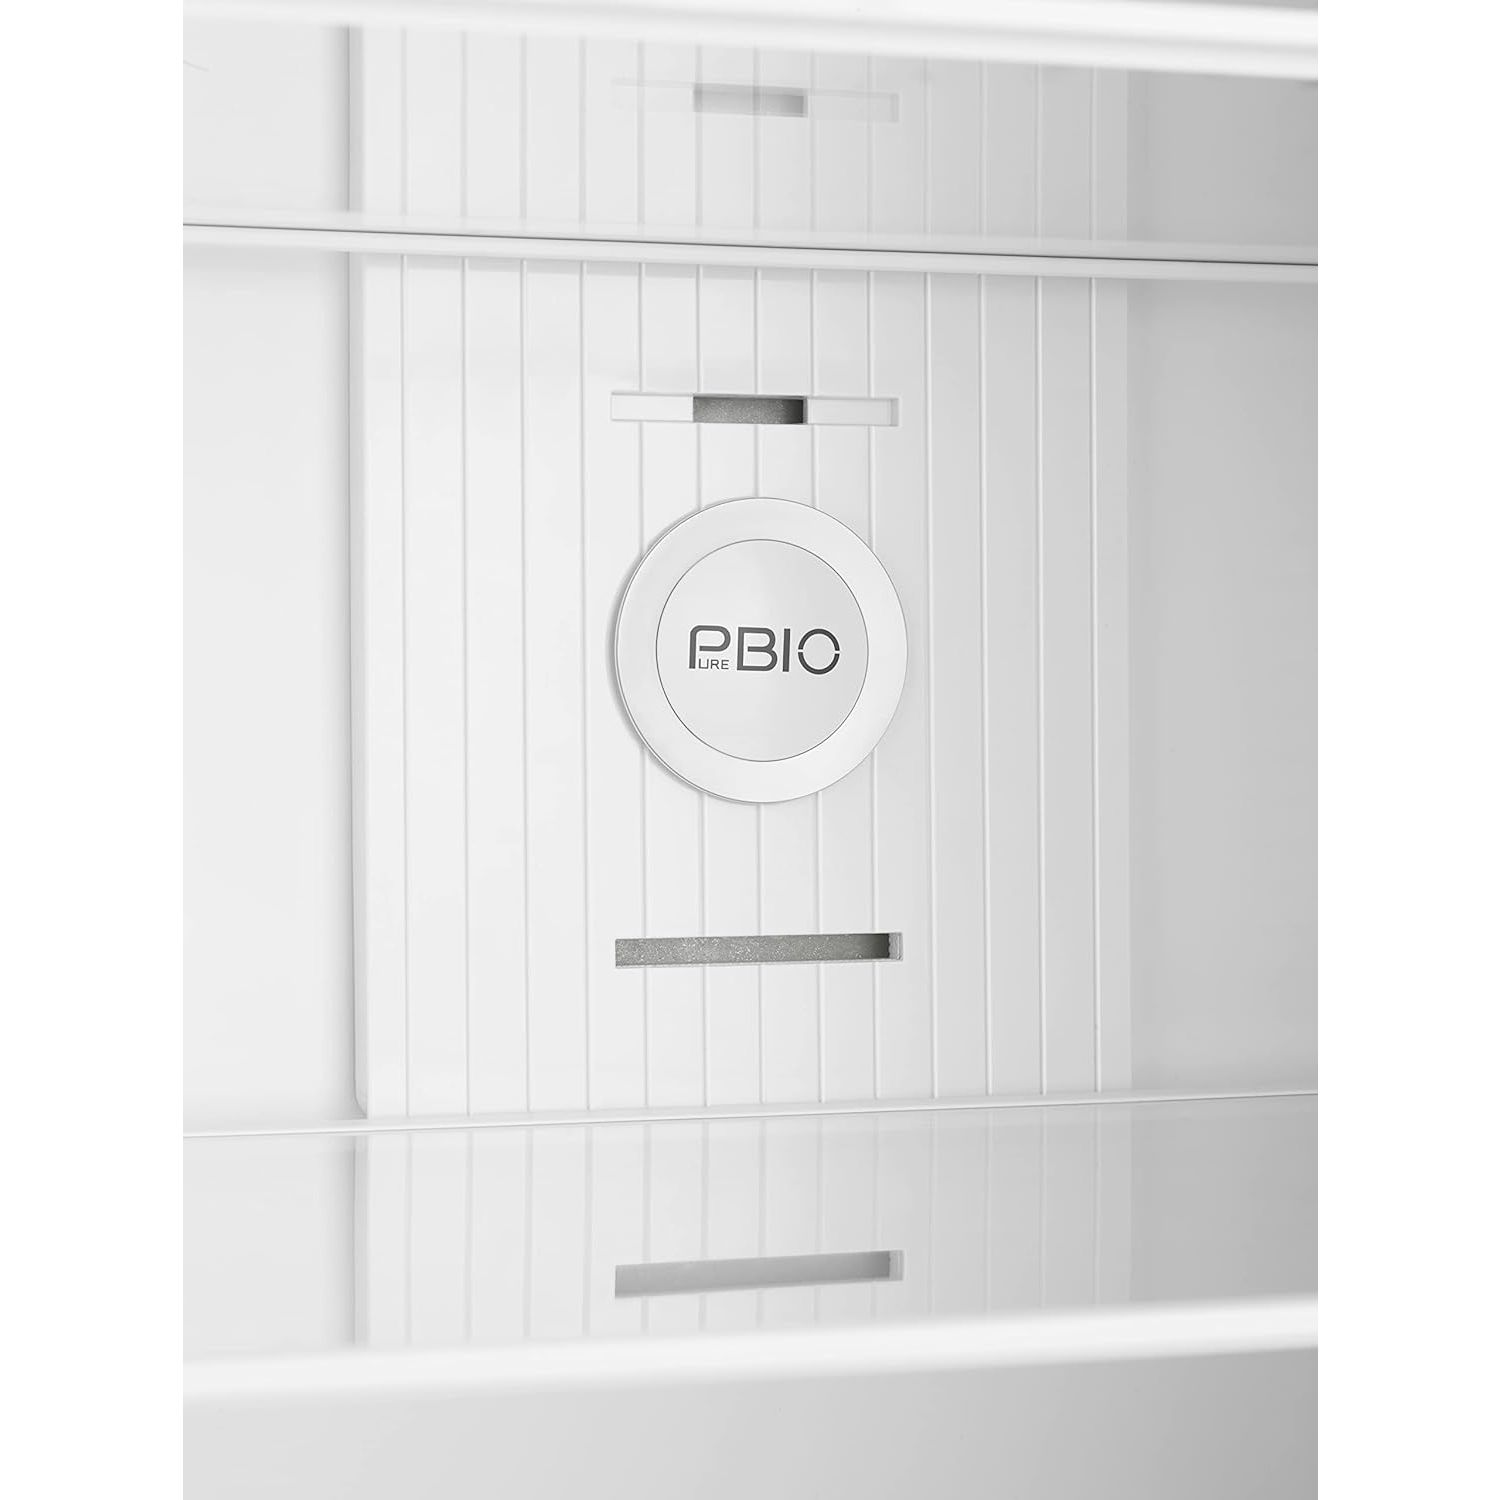 Toshiba No-Frost Refrigerator, 411 Liters, Lixiue Grey - GR-RT559WE-DMN49